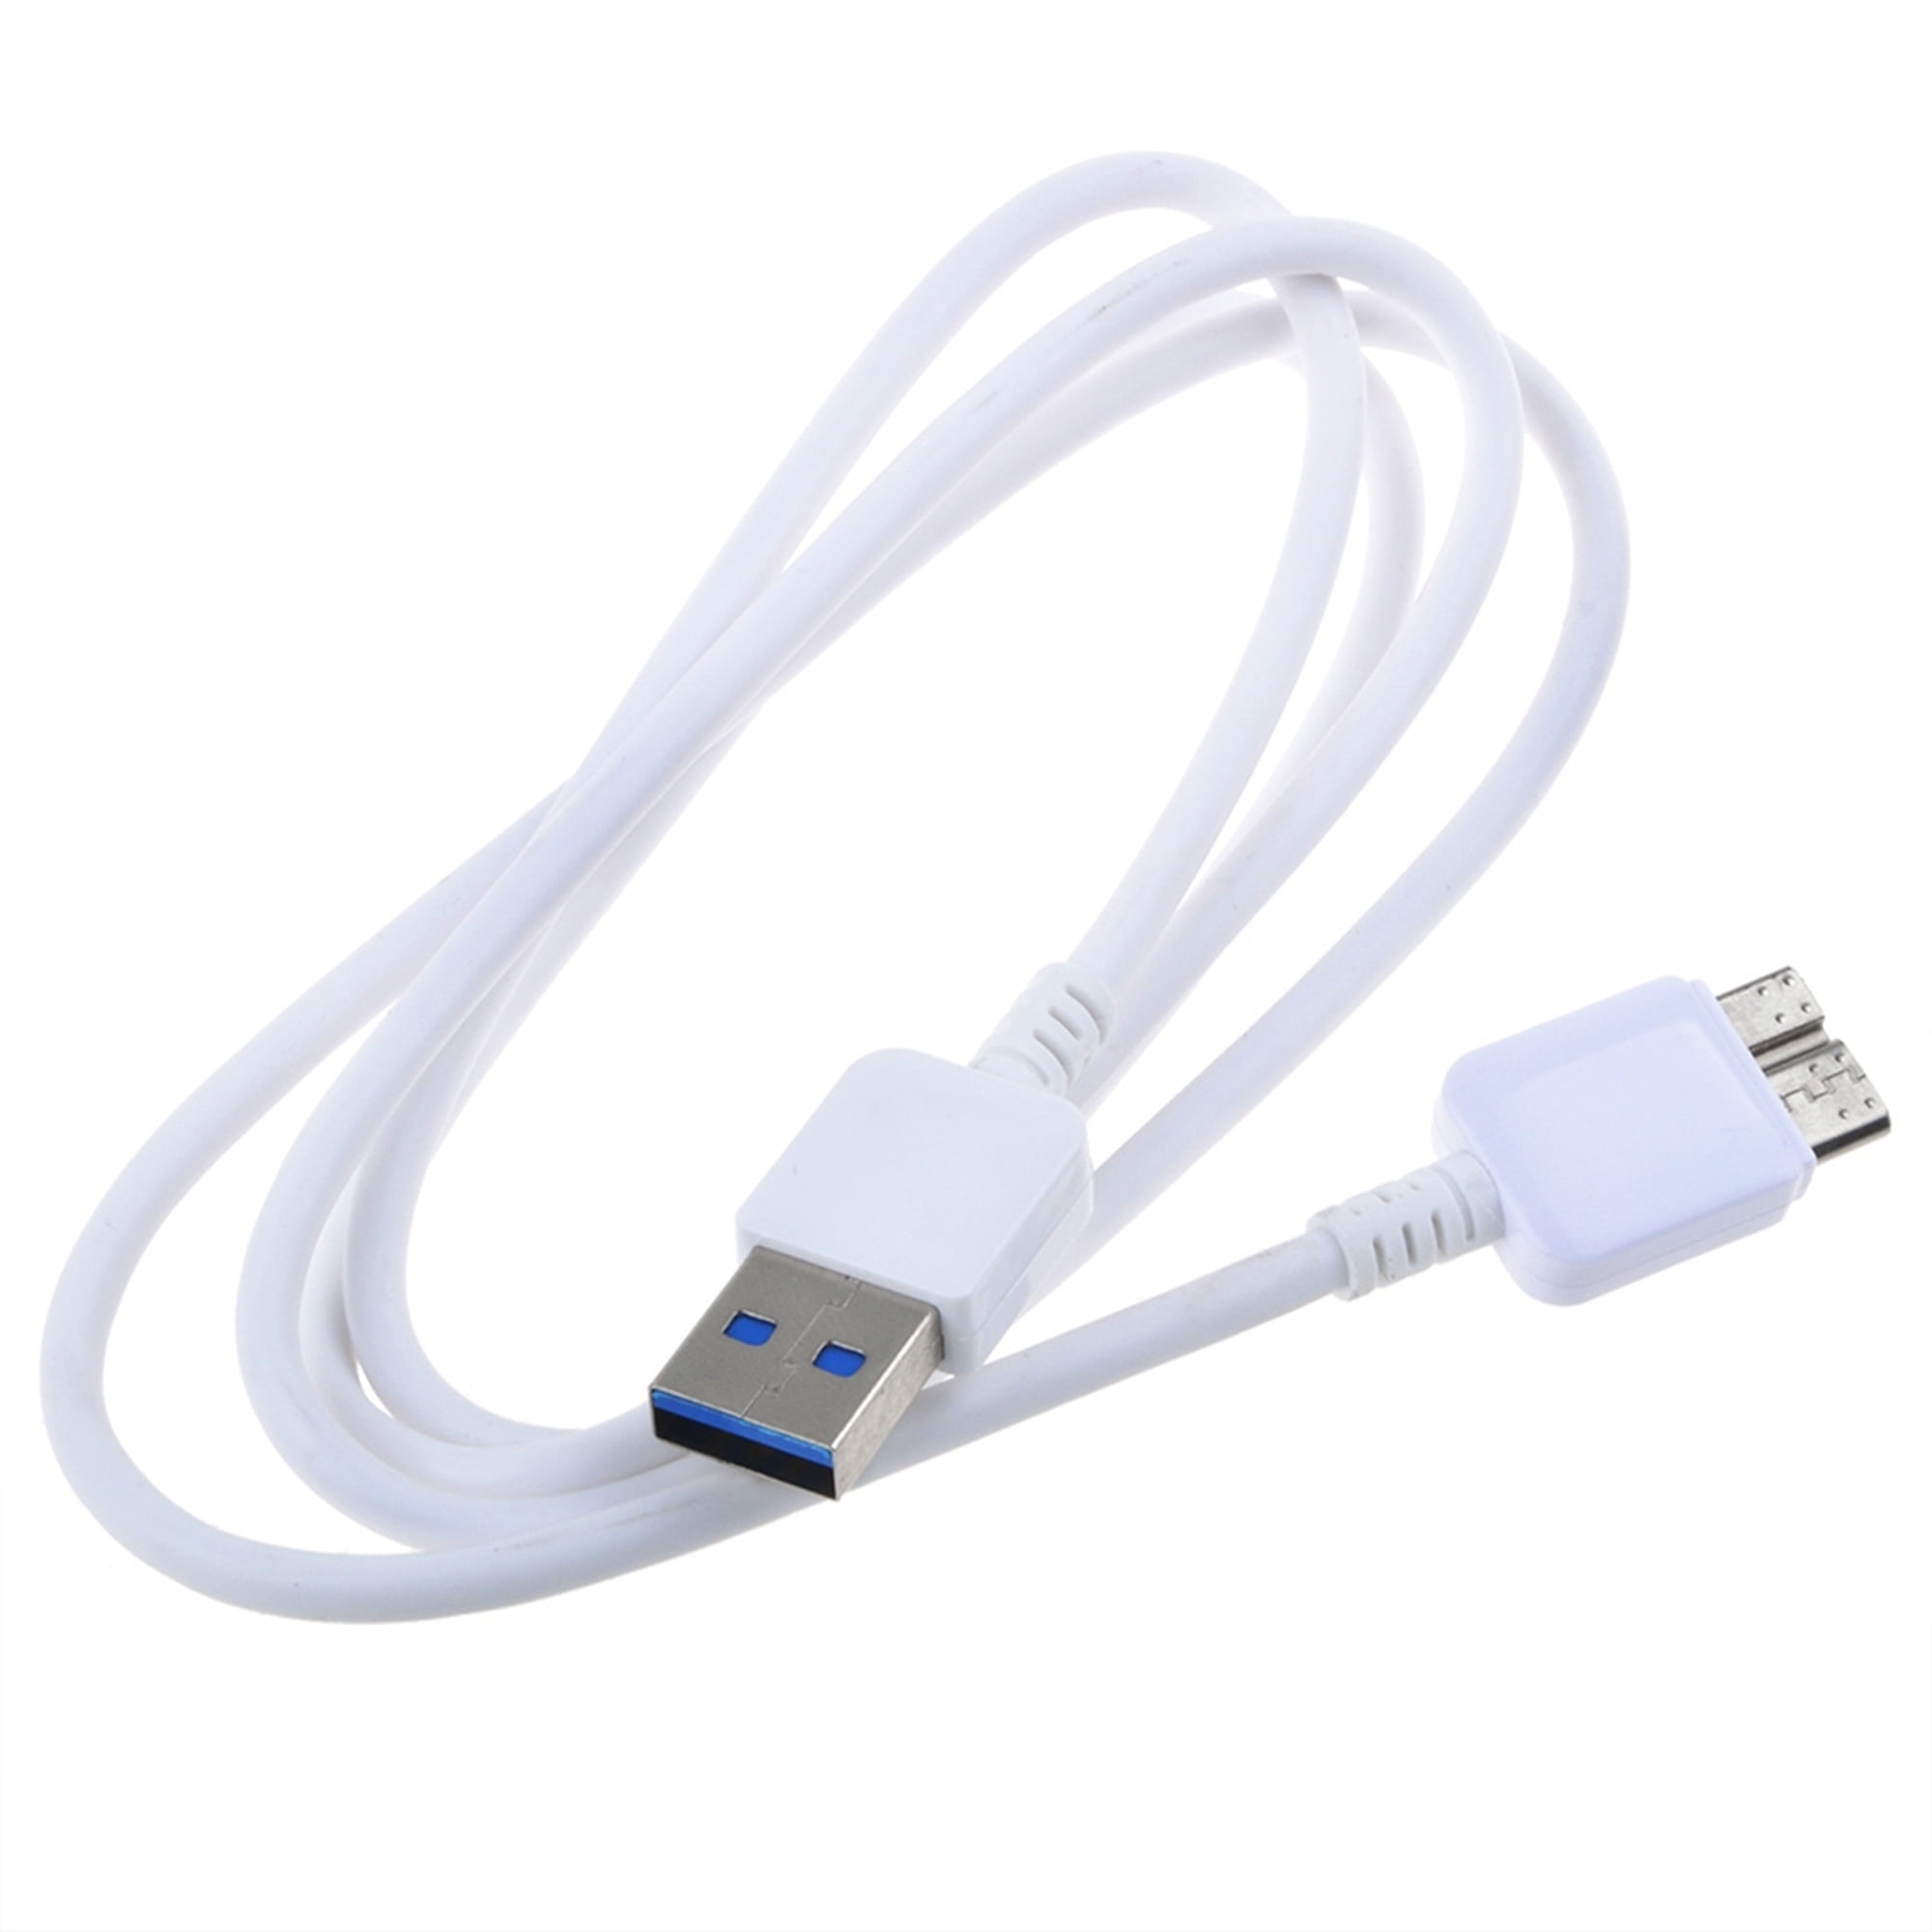 PwrON USB 3.0 Cable For Western Digital Elements Hard Drive WDBWLG0050HBK-NESN 